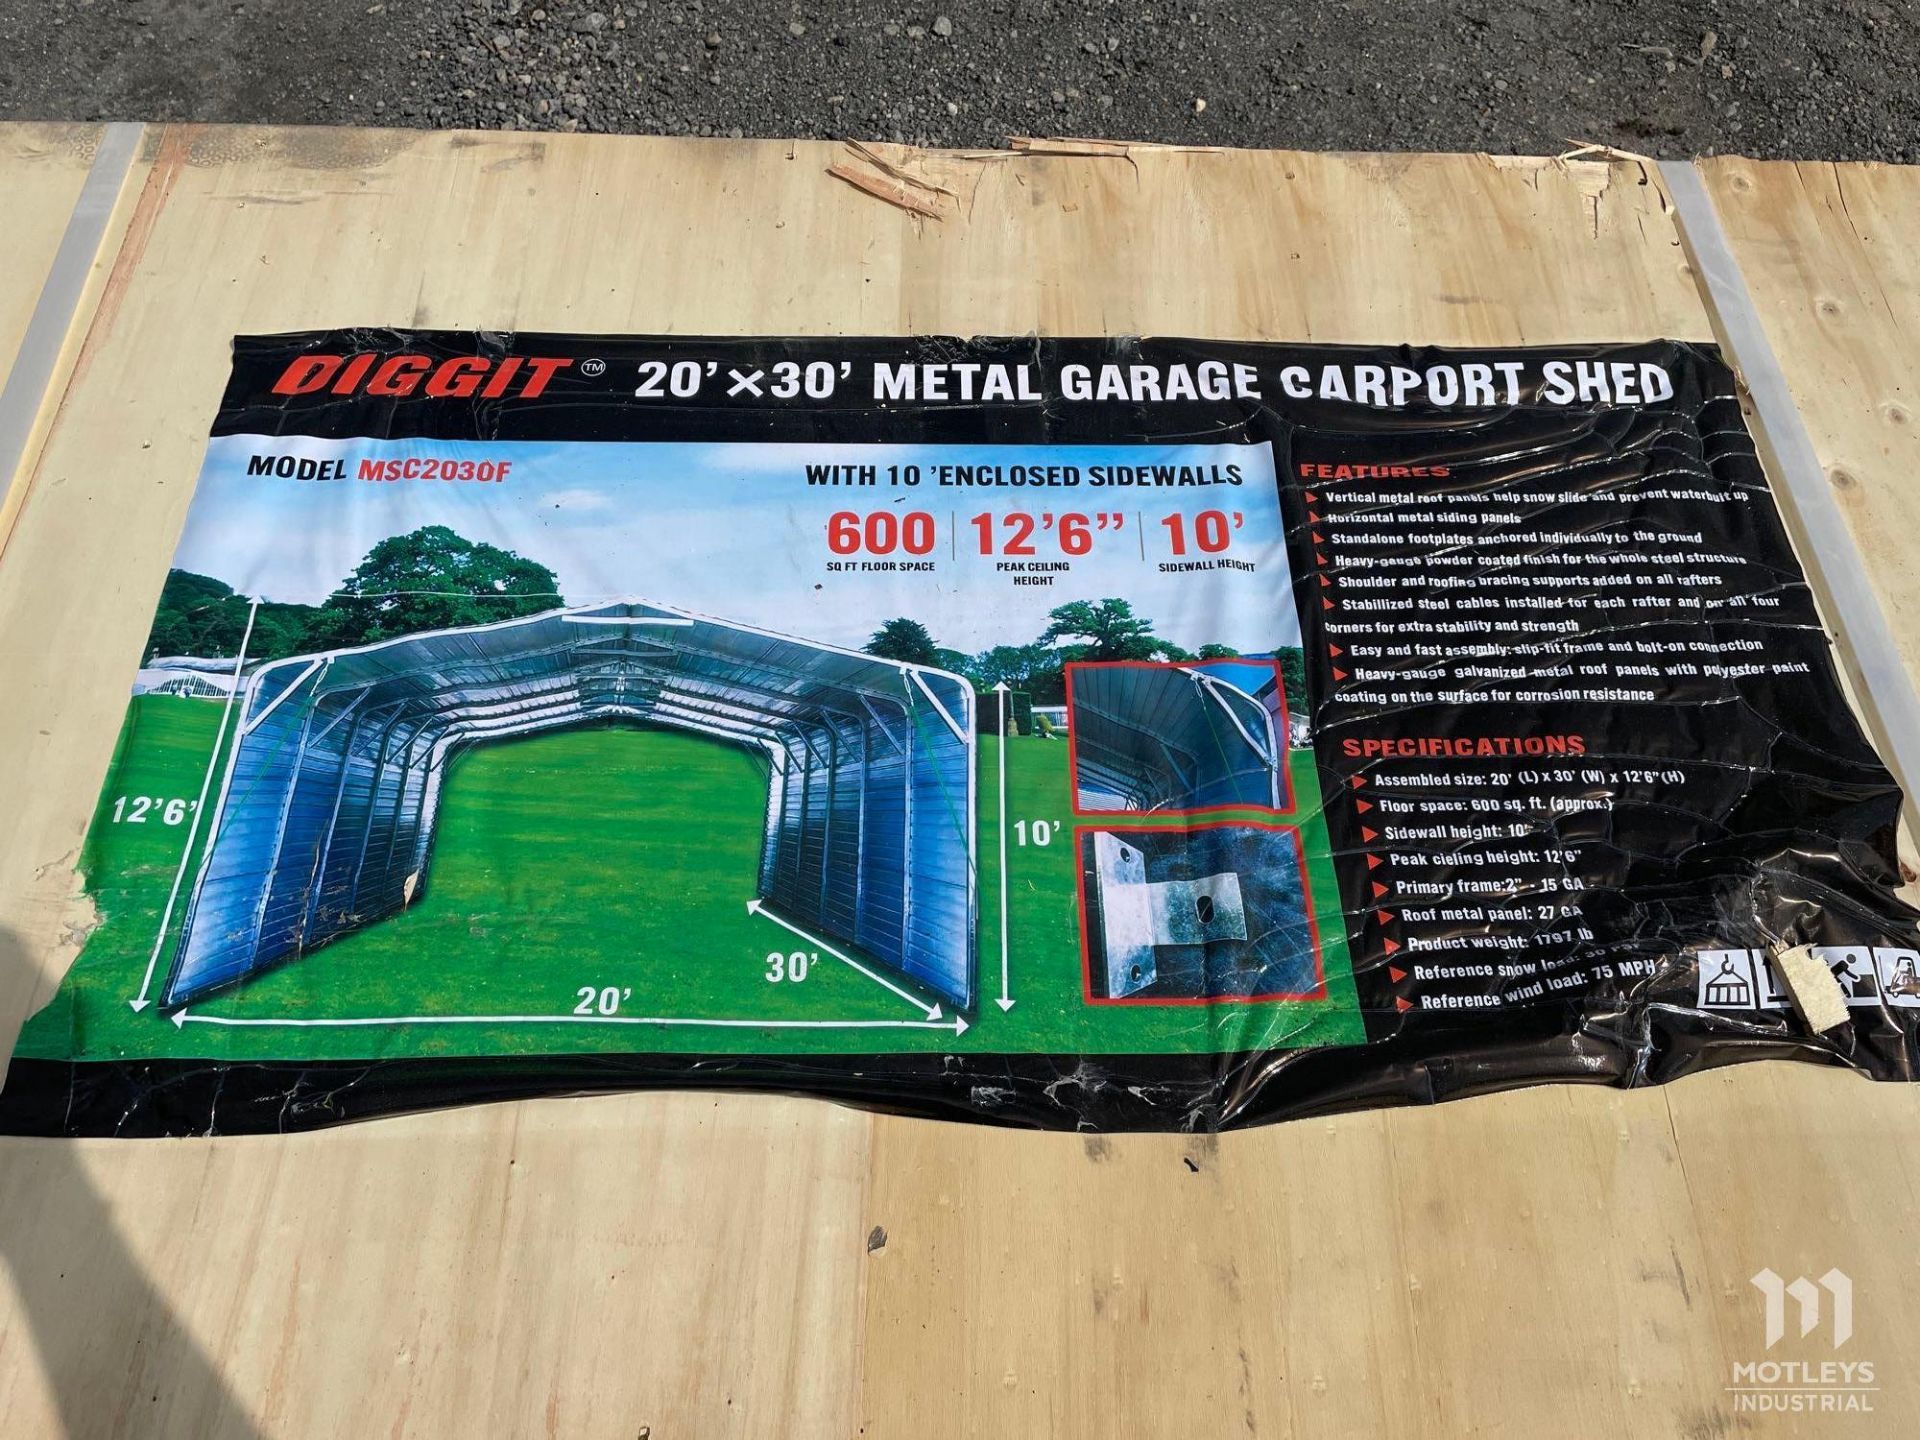 Diggit MSC2030F 20'x30' Metal Garage Carport Shed - Image 5 of 5